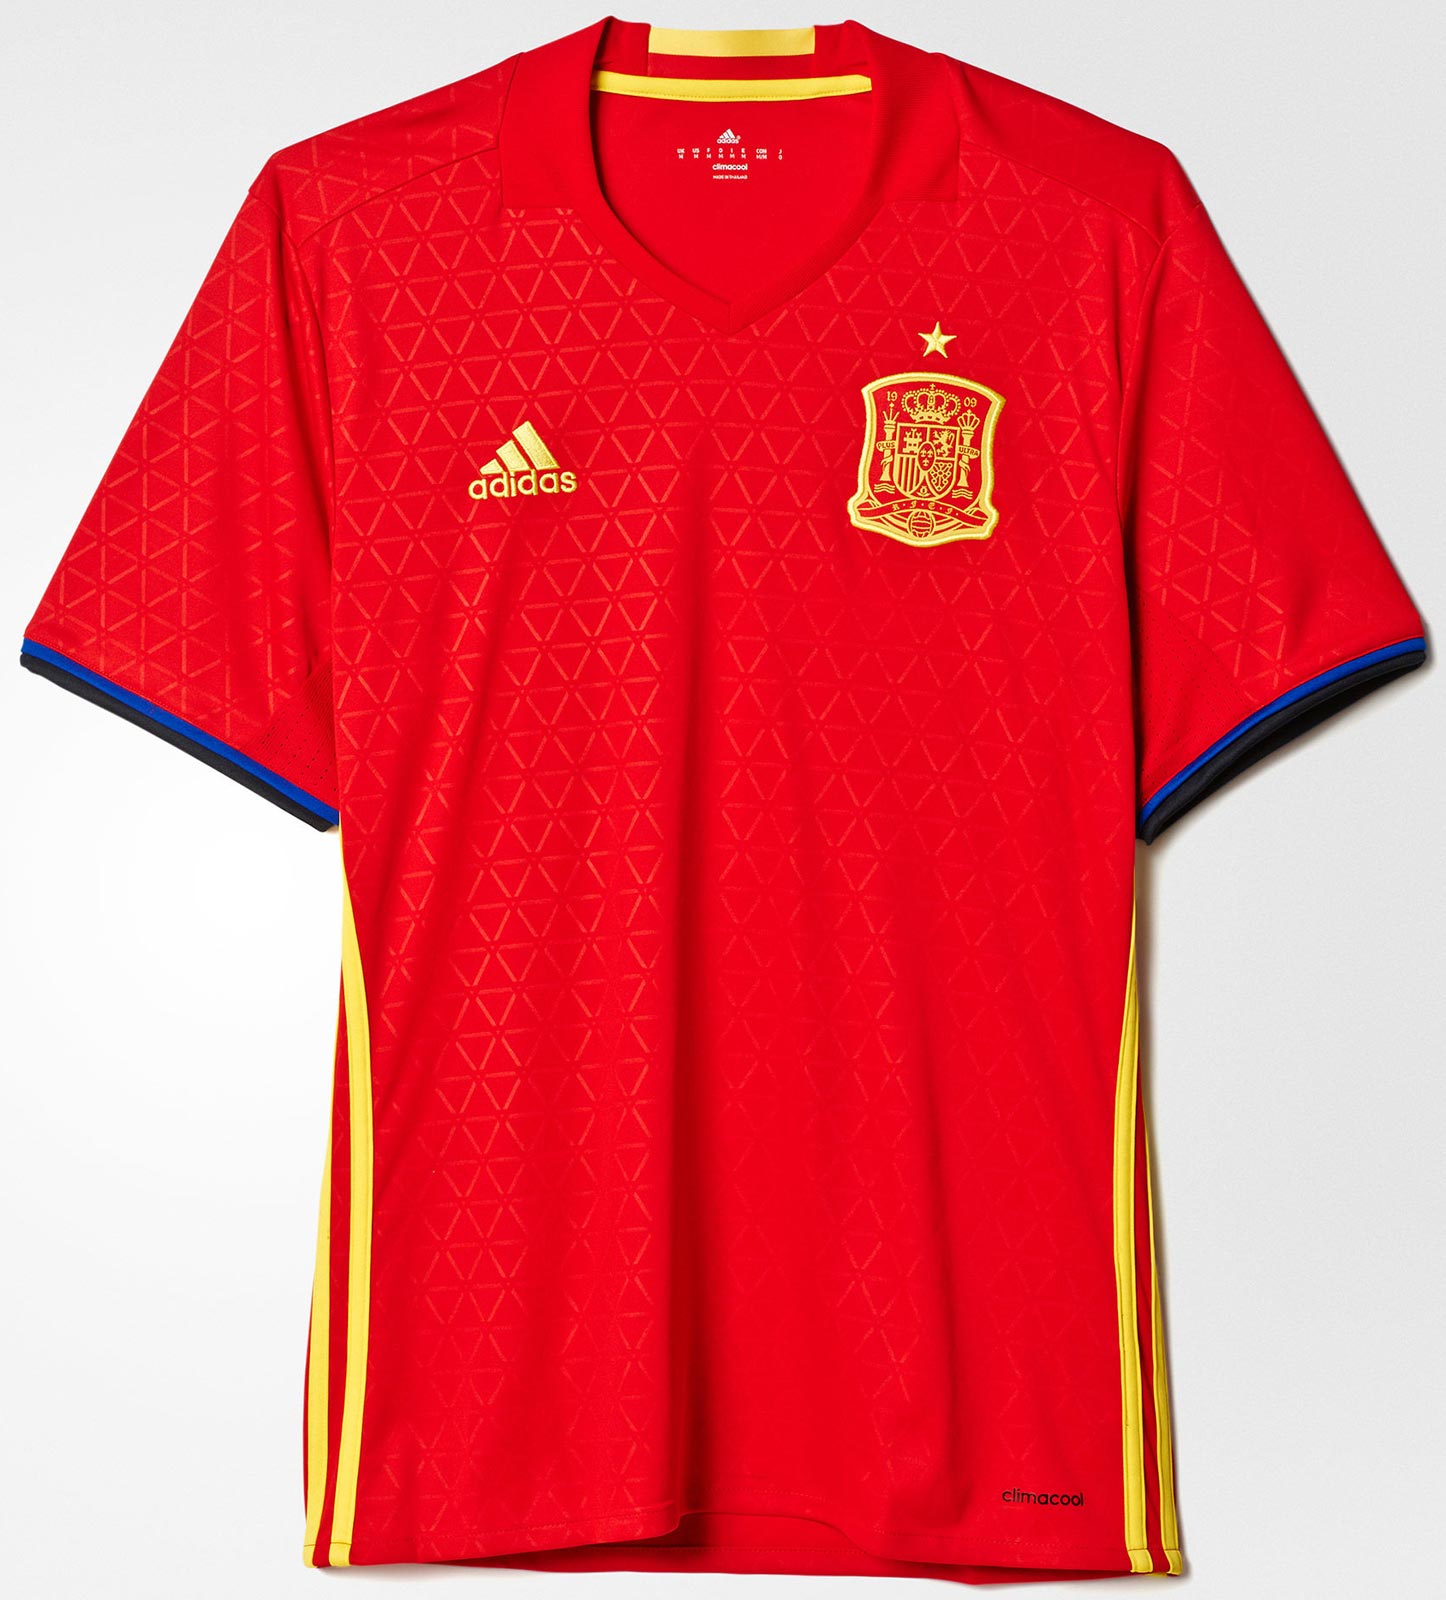 Adidas Spain Euro 2016 Home Jersey